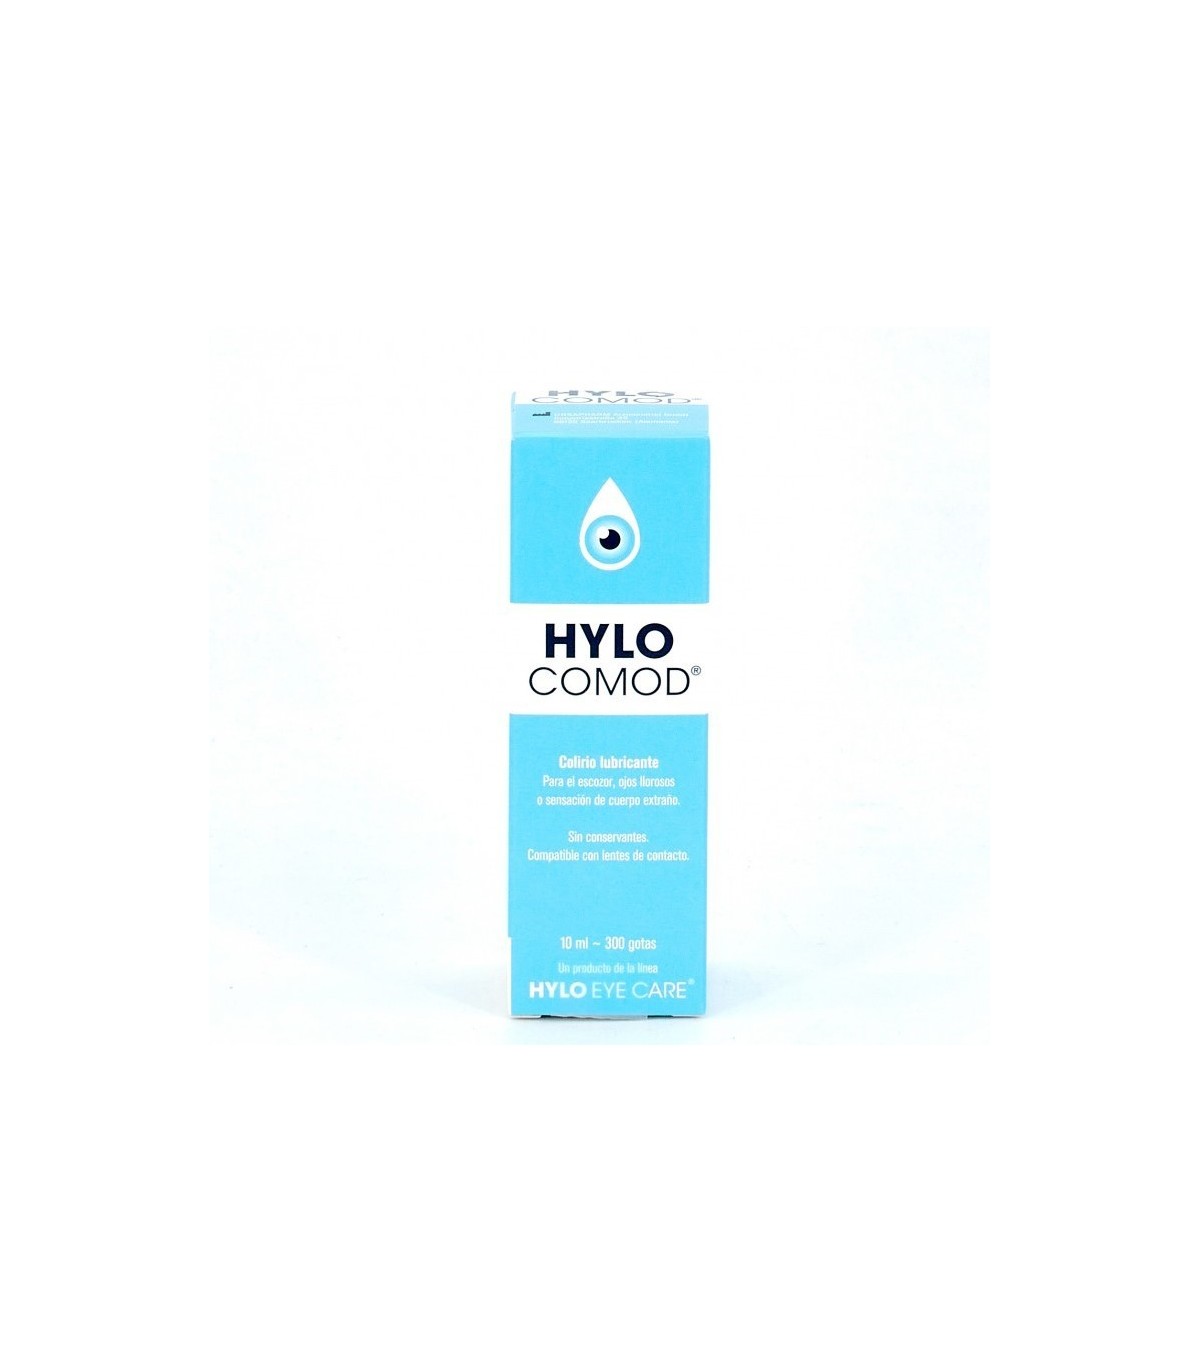 Lubricante Oftálmico HYLO DUAL 20 mg x 0,5 mg en Gotas 10 ml